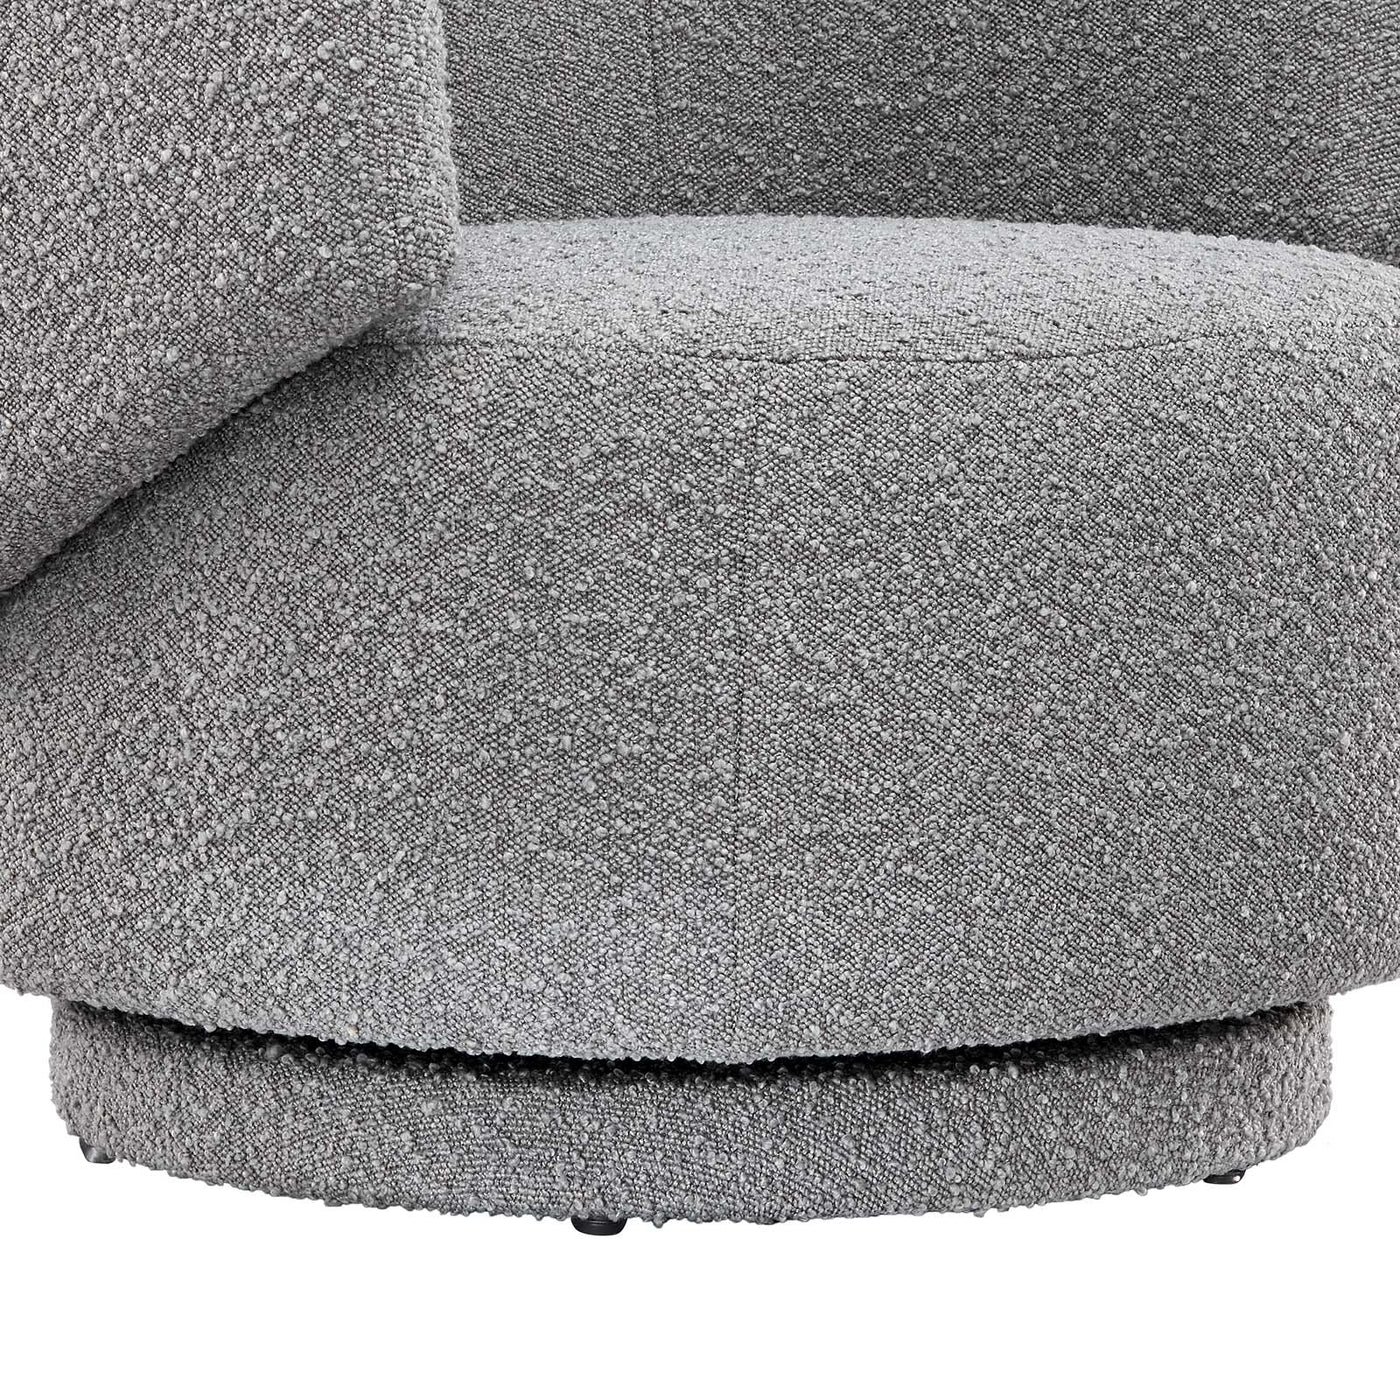 Celestia Boucle Fabric Swivel Chair